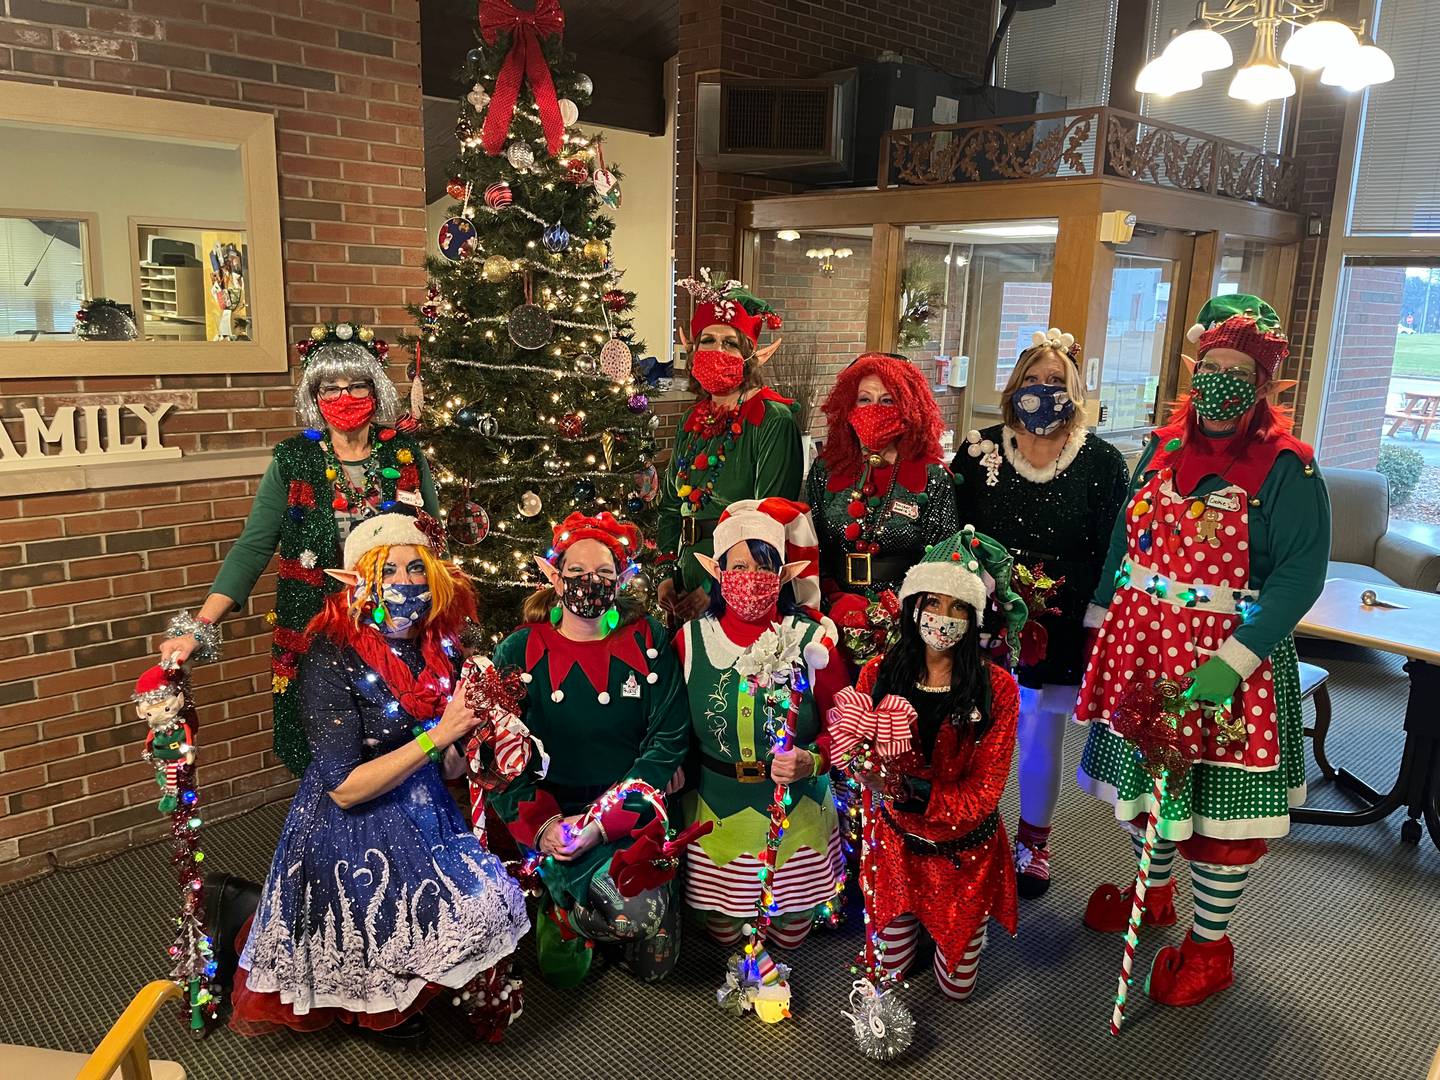 The Mistletoe Misfits have brought joy this Christmas season to senior living facilities throughout the Illinois Valley.